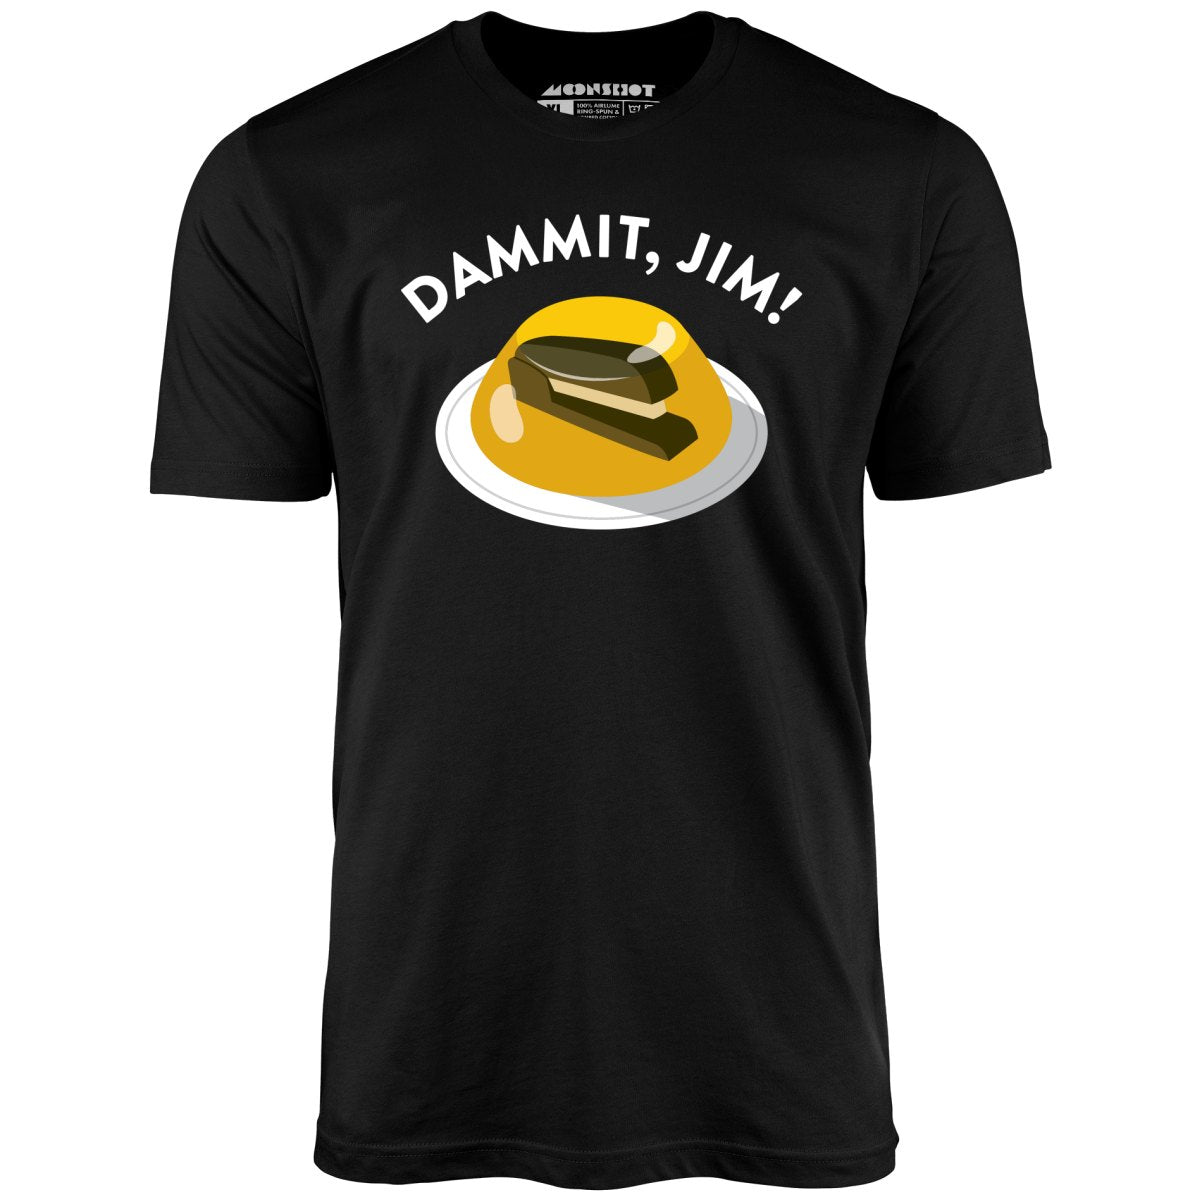 Dammit Jim - Unisex T-Shirt